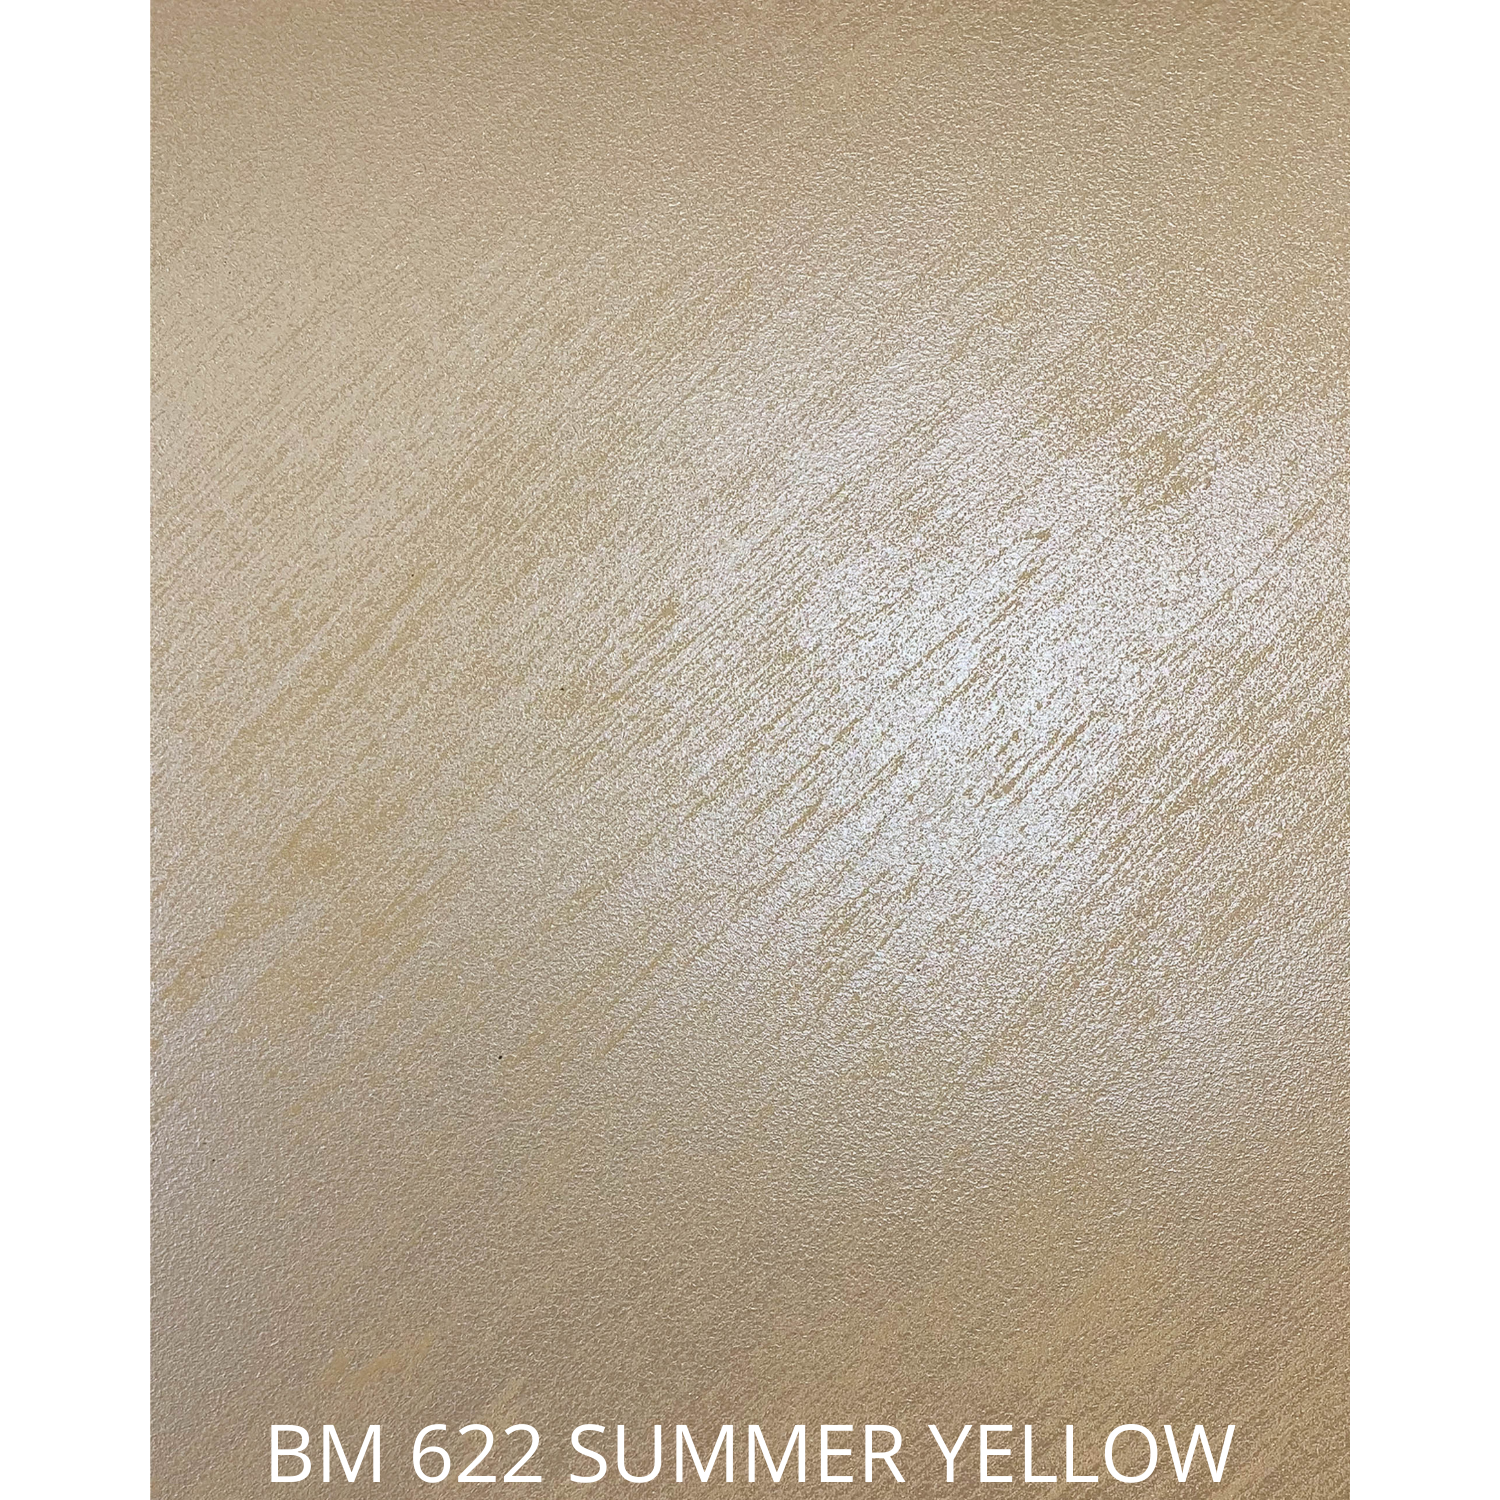 BM 622 SUMMER YELLOW